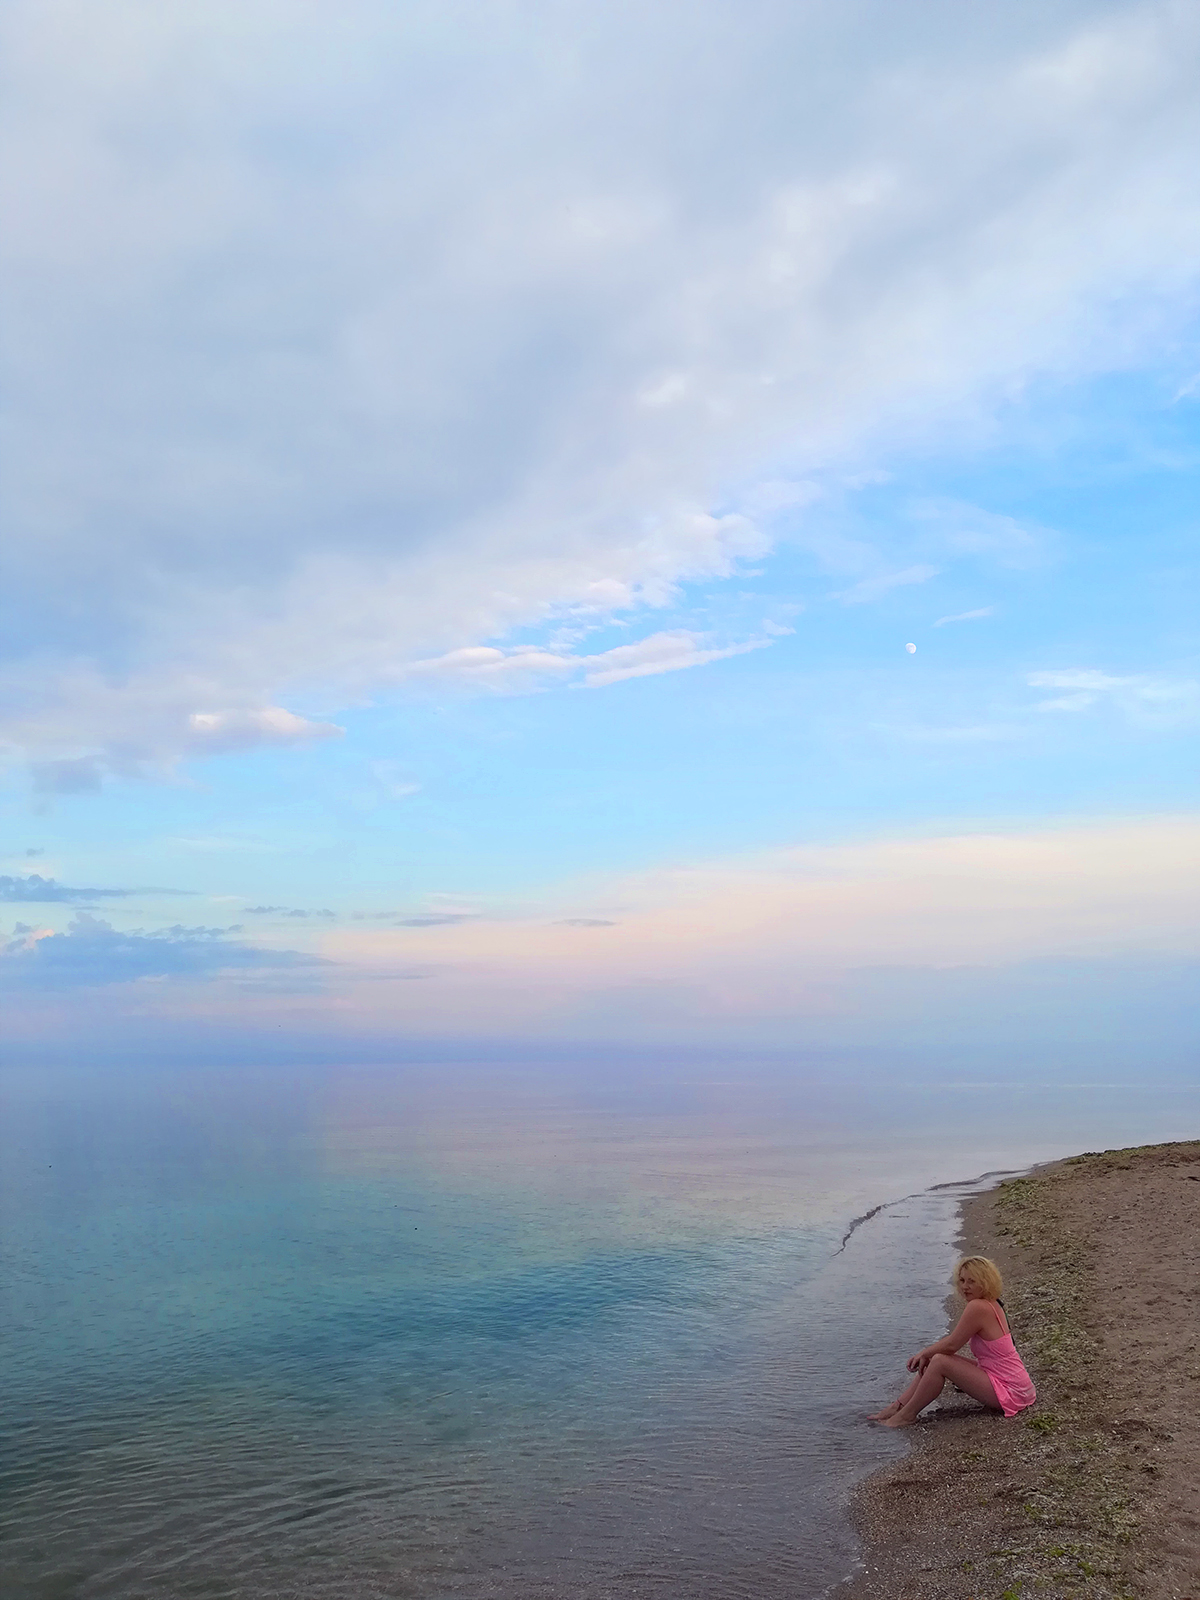 beautiful Summer sunset by the beach, hot pink dress, girl on the beach, vama veche